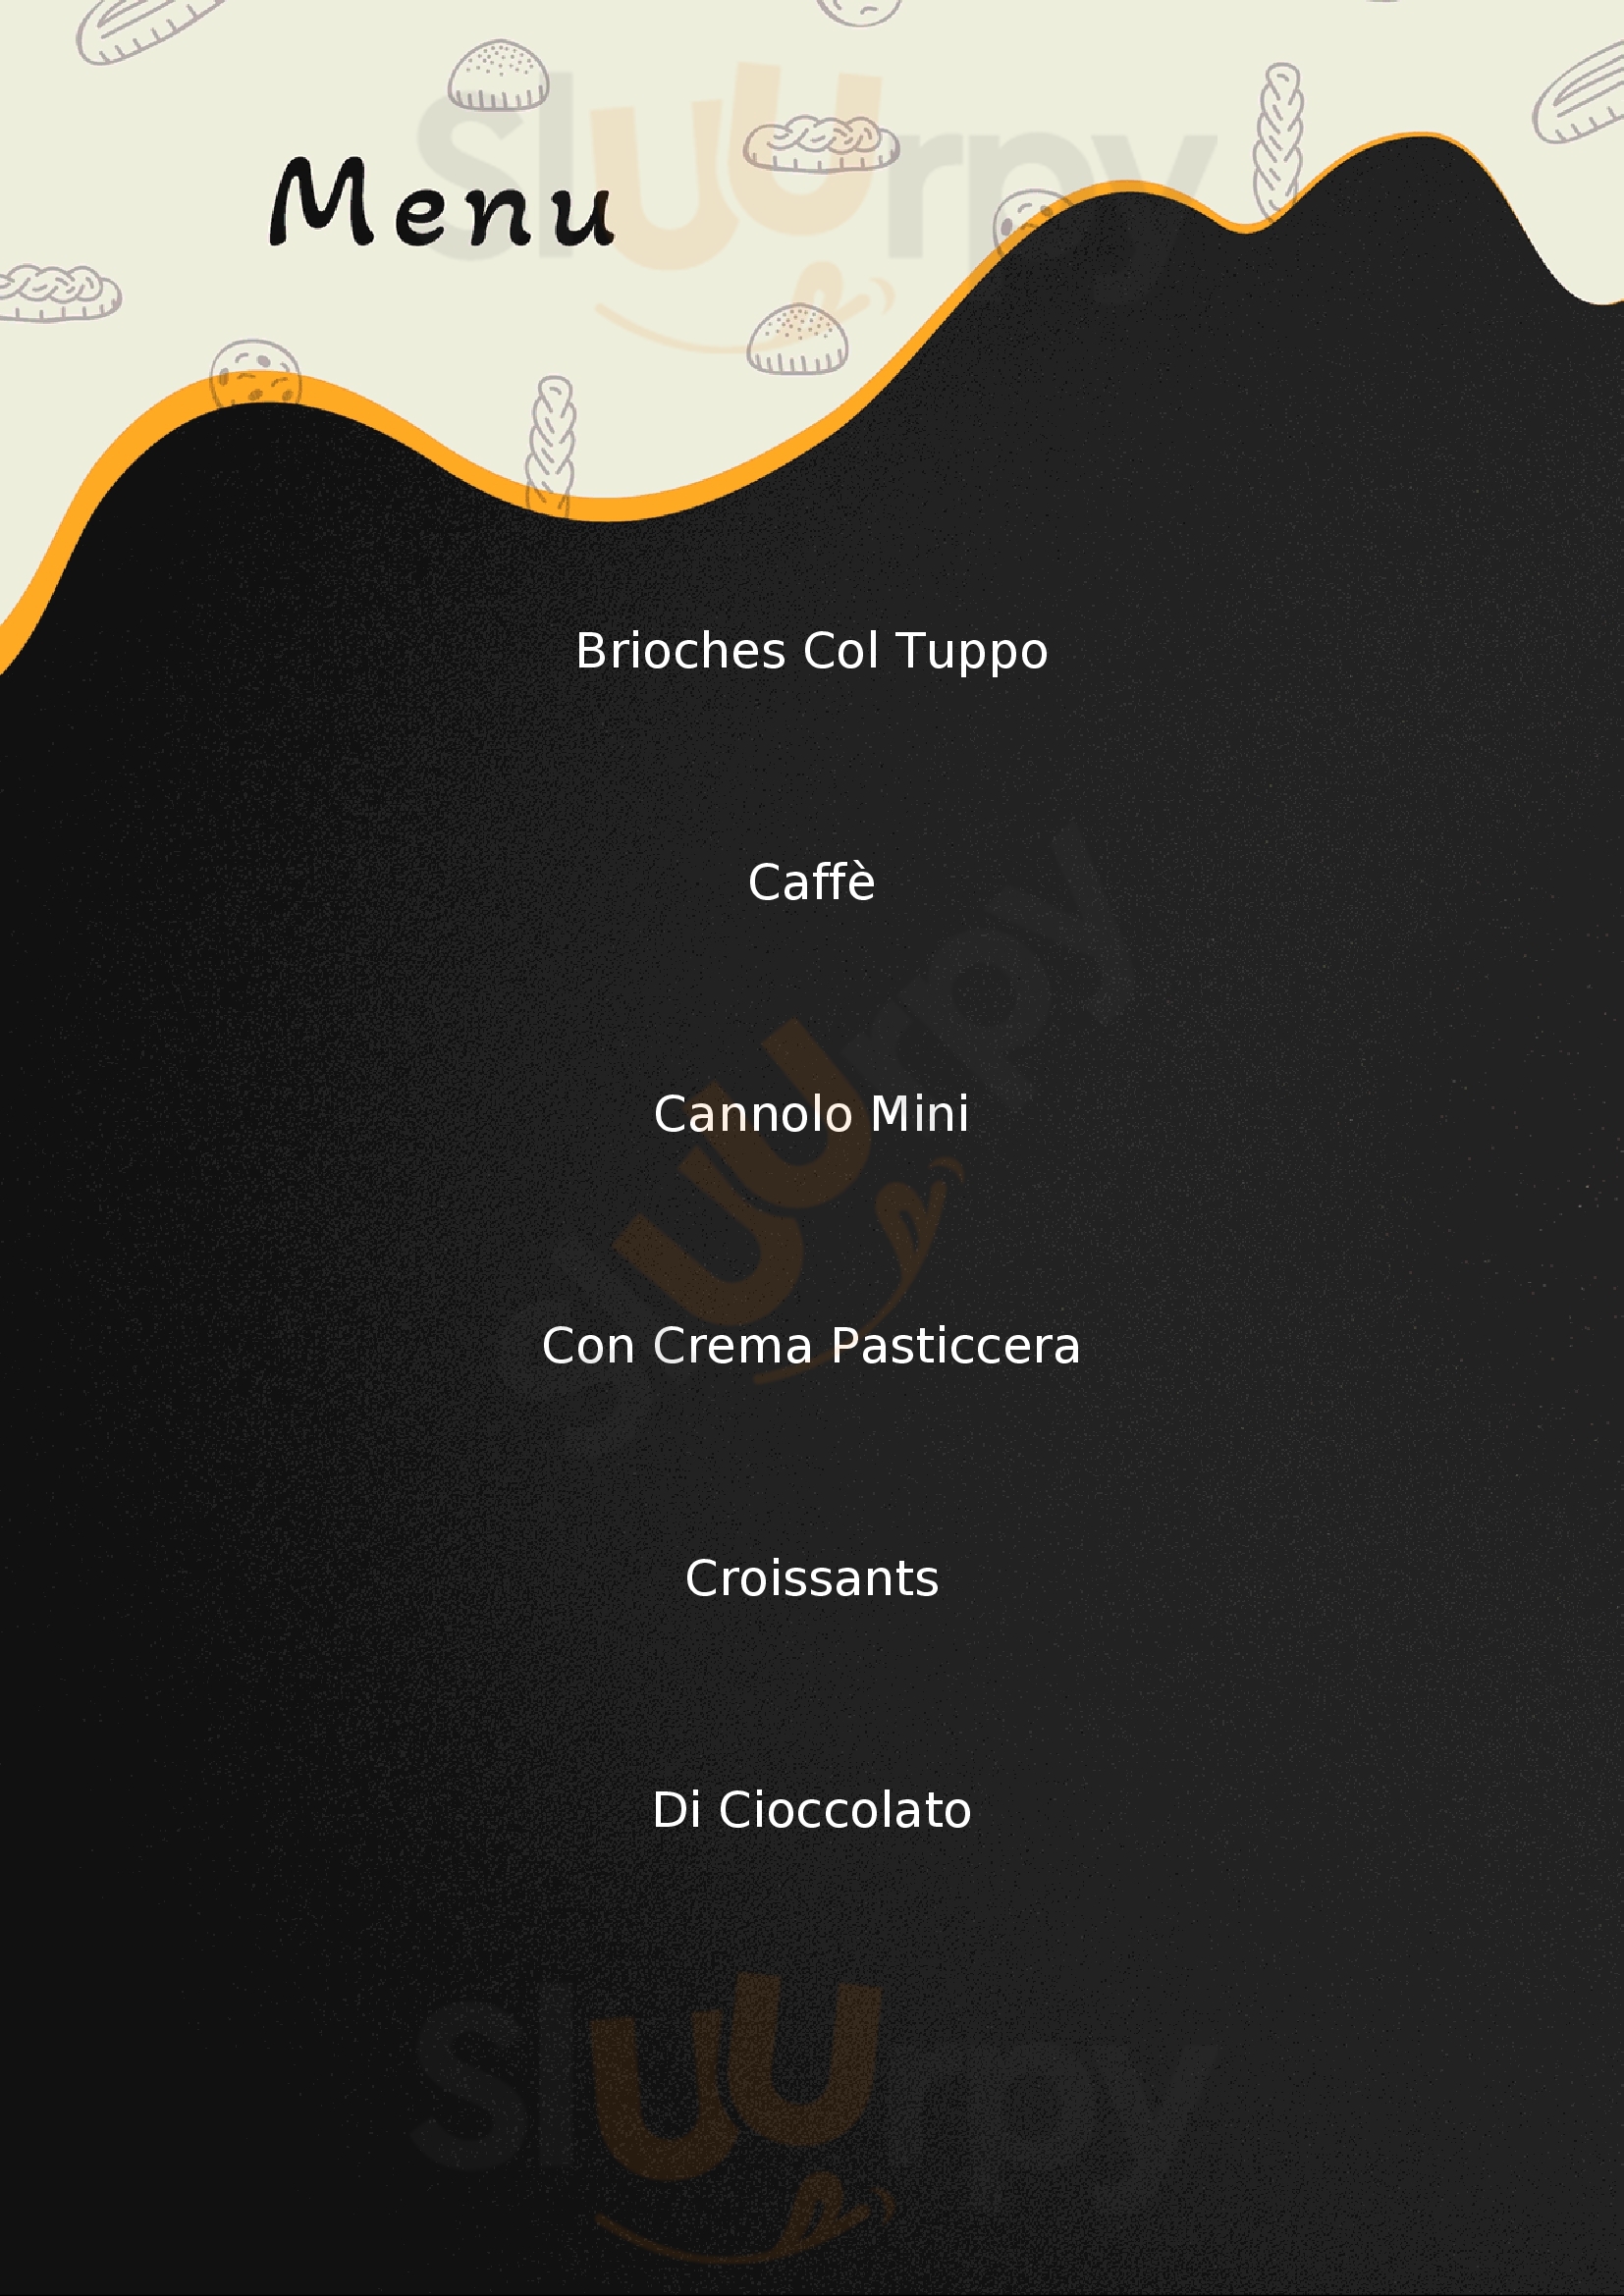 Sach Cafè Villafranca Tirrena menù 1 pagina